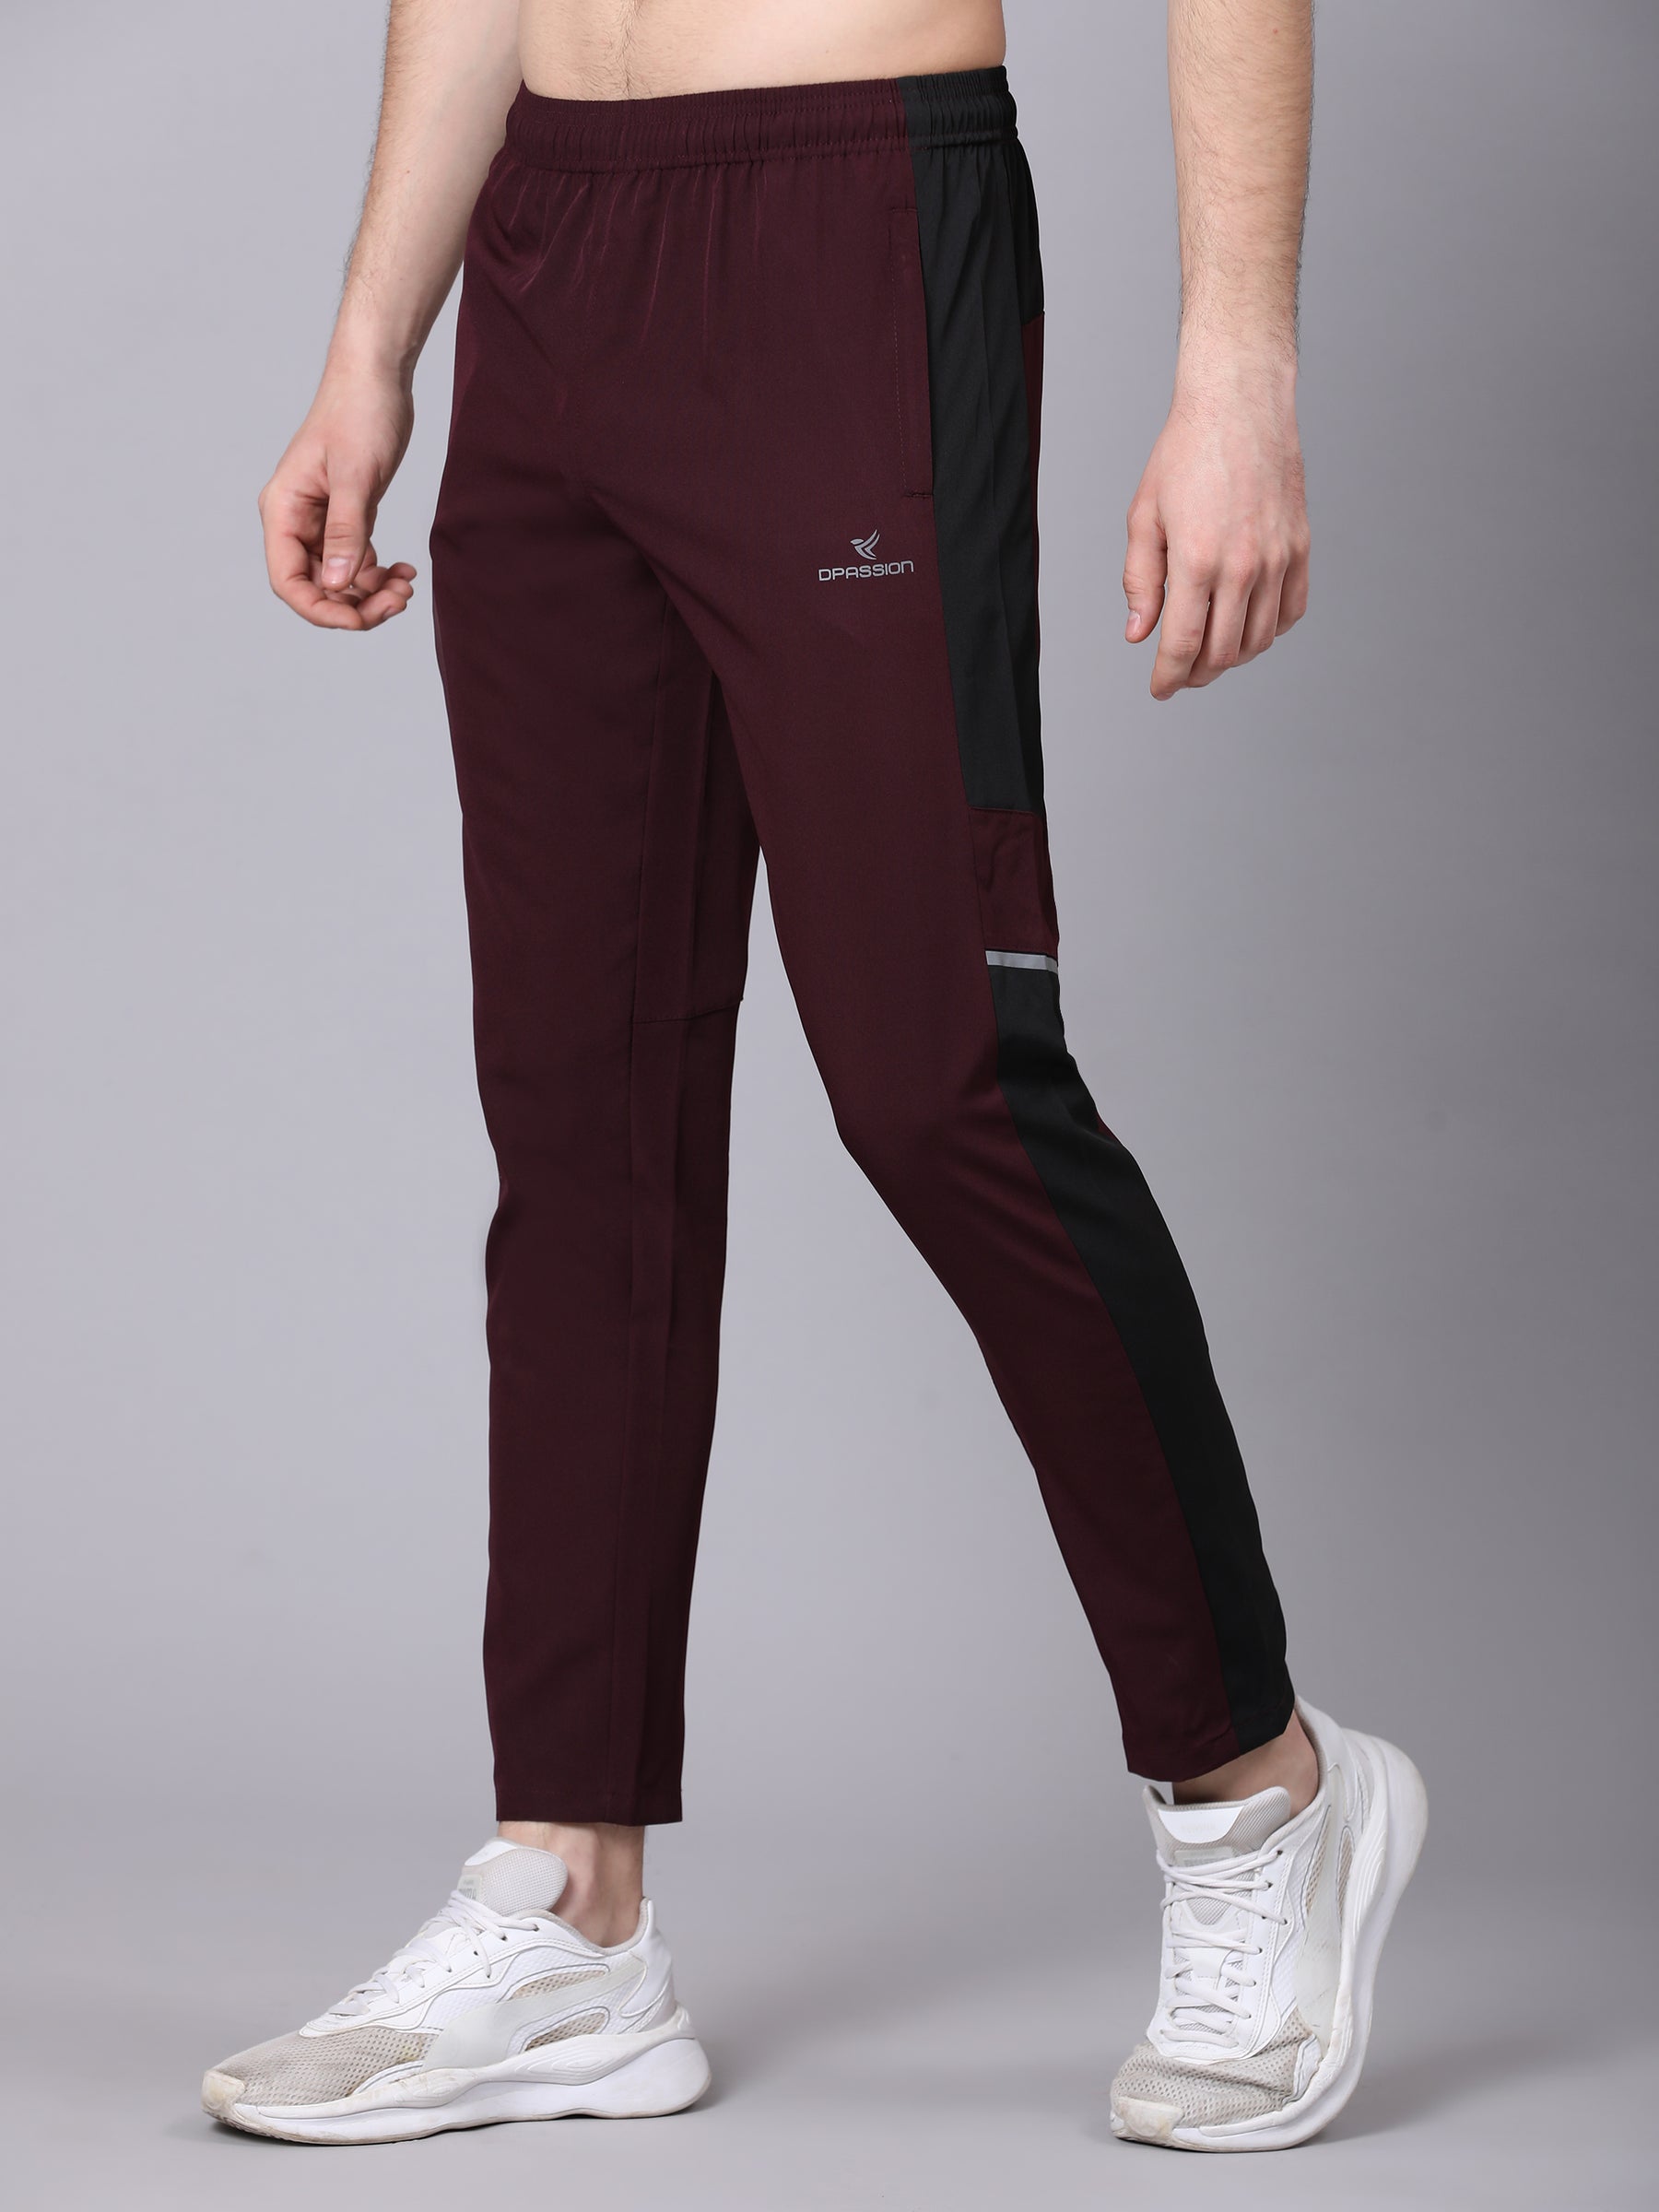 Mens Sports Joggers Pants Trousers Casual Athletic Jogging Sweatpants W/  Pockets | eBay